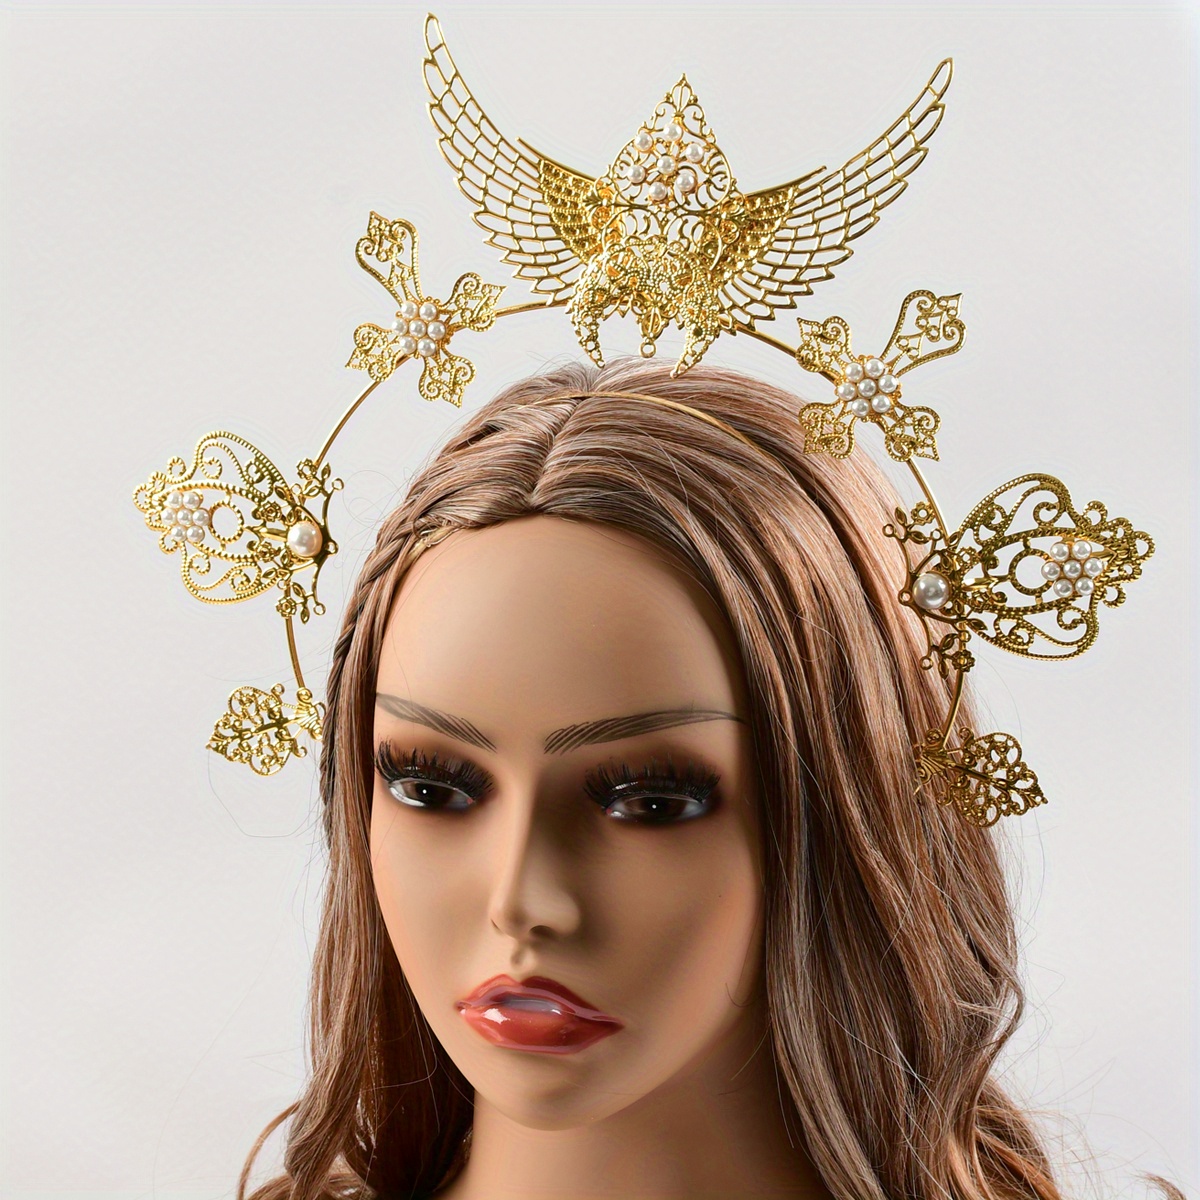  Abaodam 4 Pcs Our Lady's Headband Decorative Hairband Gold  Headband Gothic Tiara Goddess Headband Virgin Headband Crowns for Women  Gold Stars Bride Photo Accessories Common Metal : Beauty & Personal Care